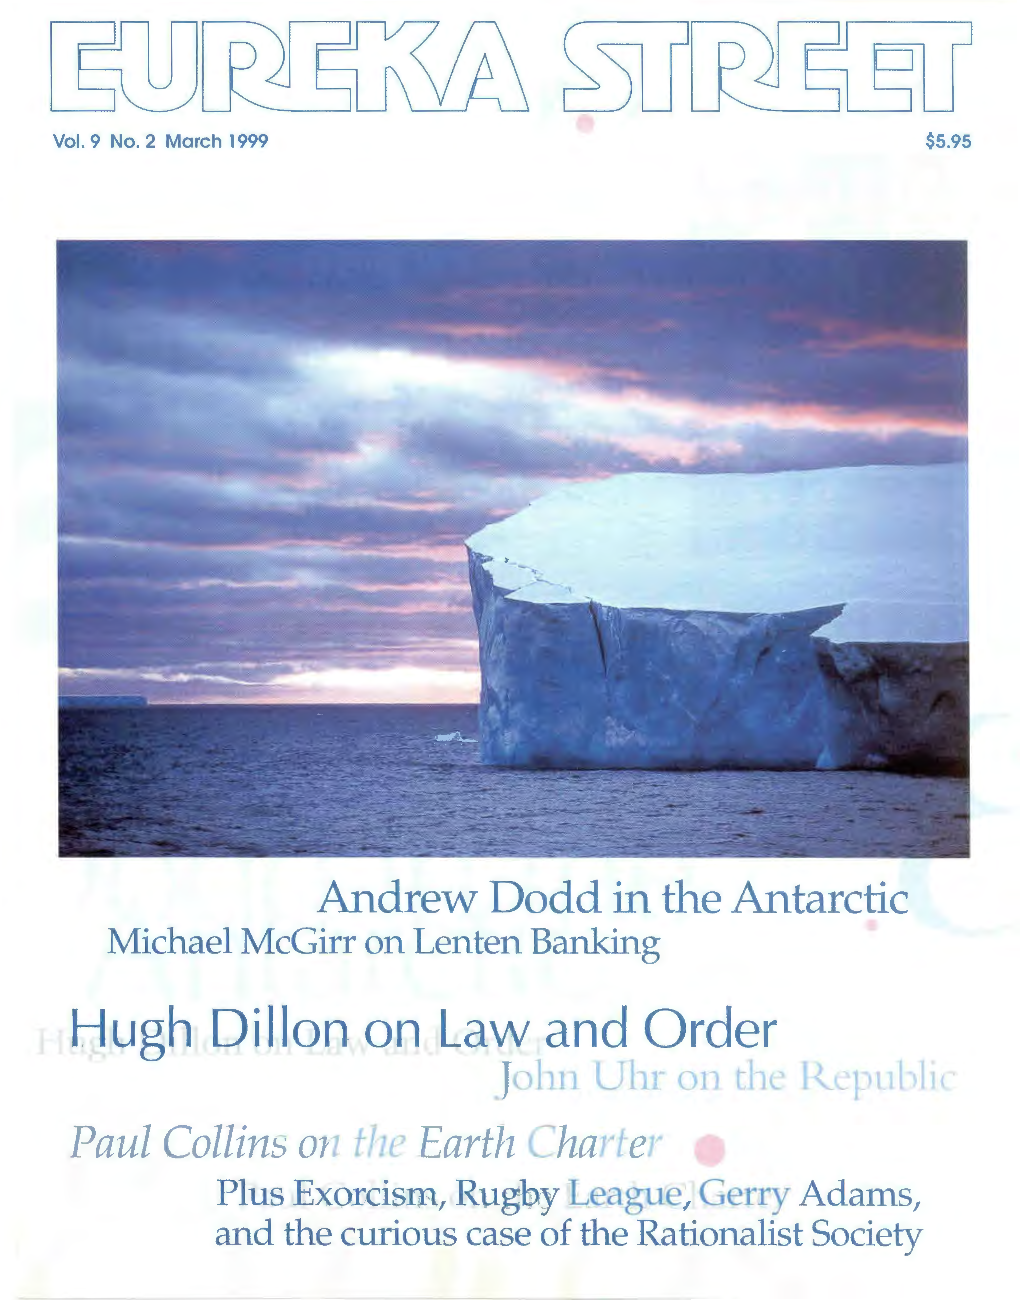 Hugh Dillon on Law and Order ()Ntl U 1R 011 Tt1c 1 C11t1 1